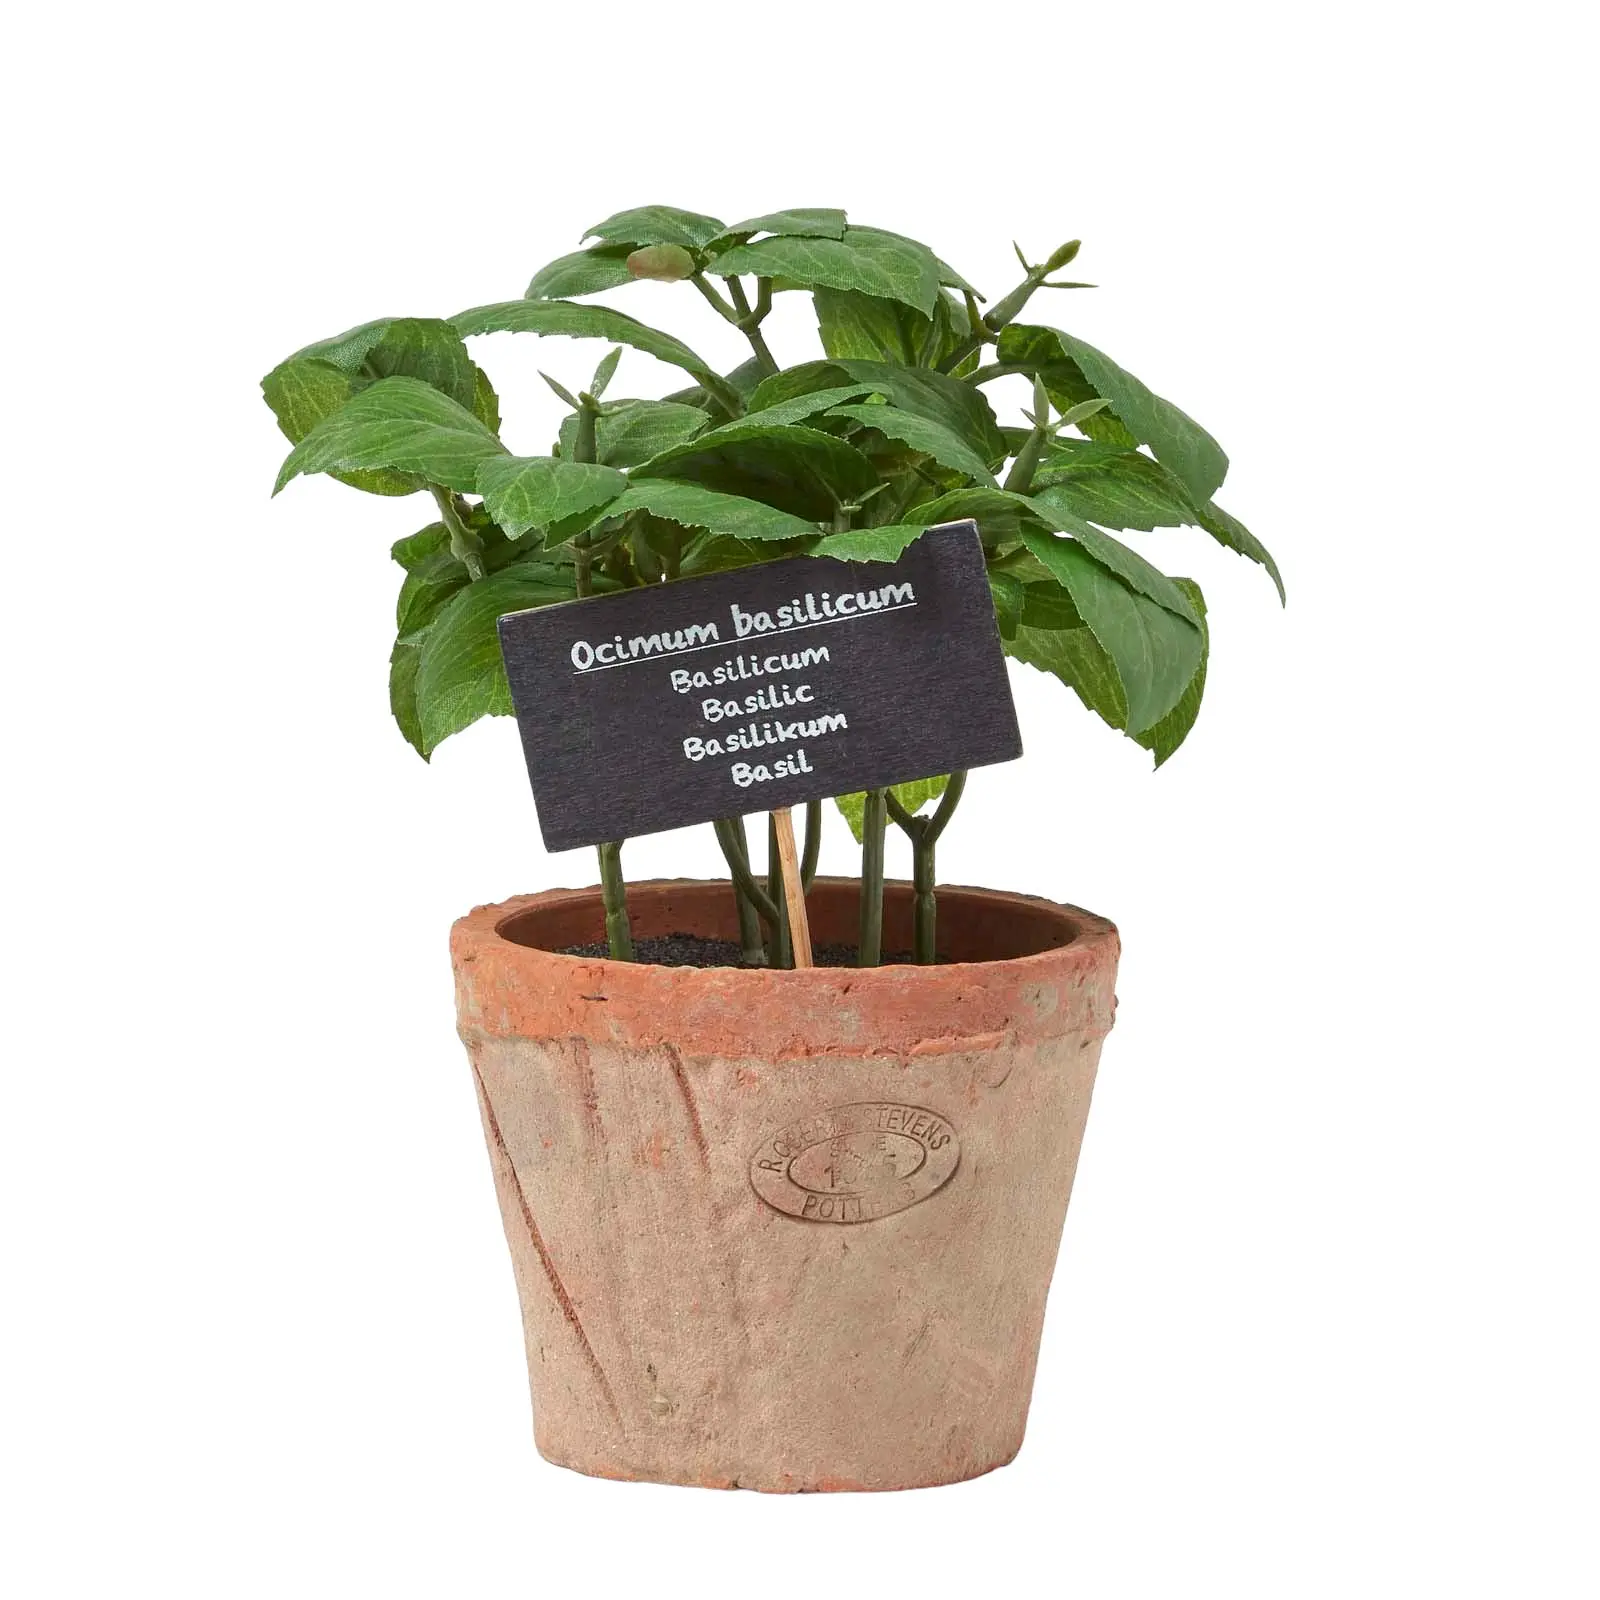 K眉nstliche Basilikum-Topfpflanze